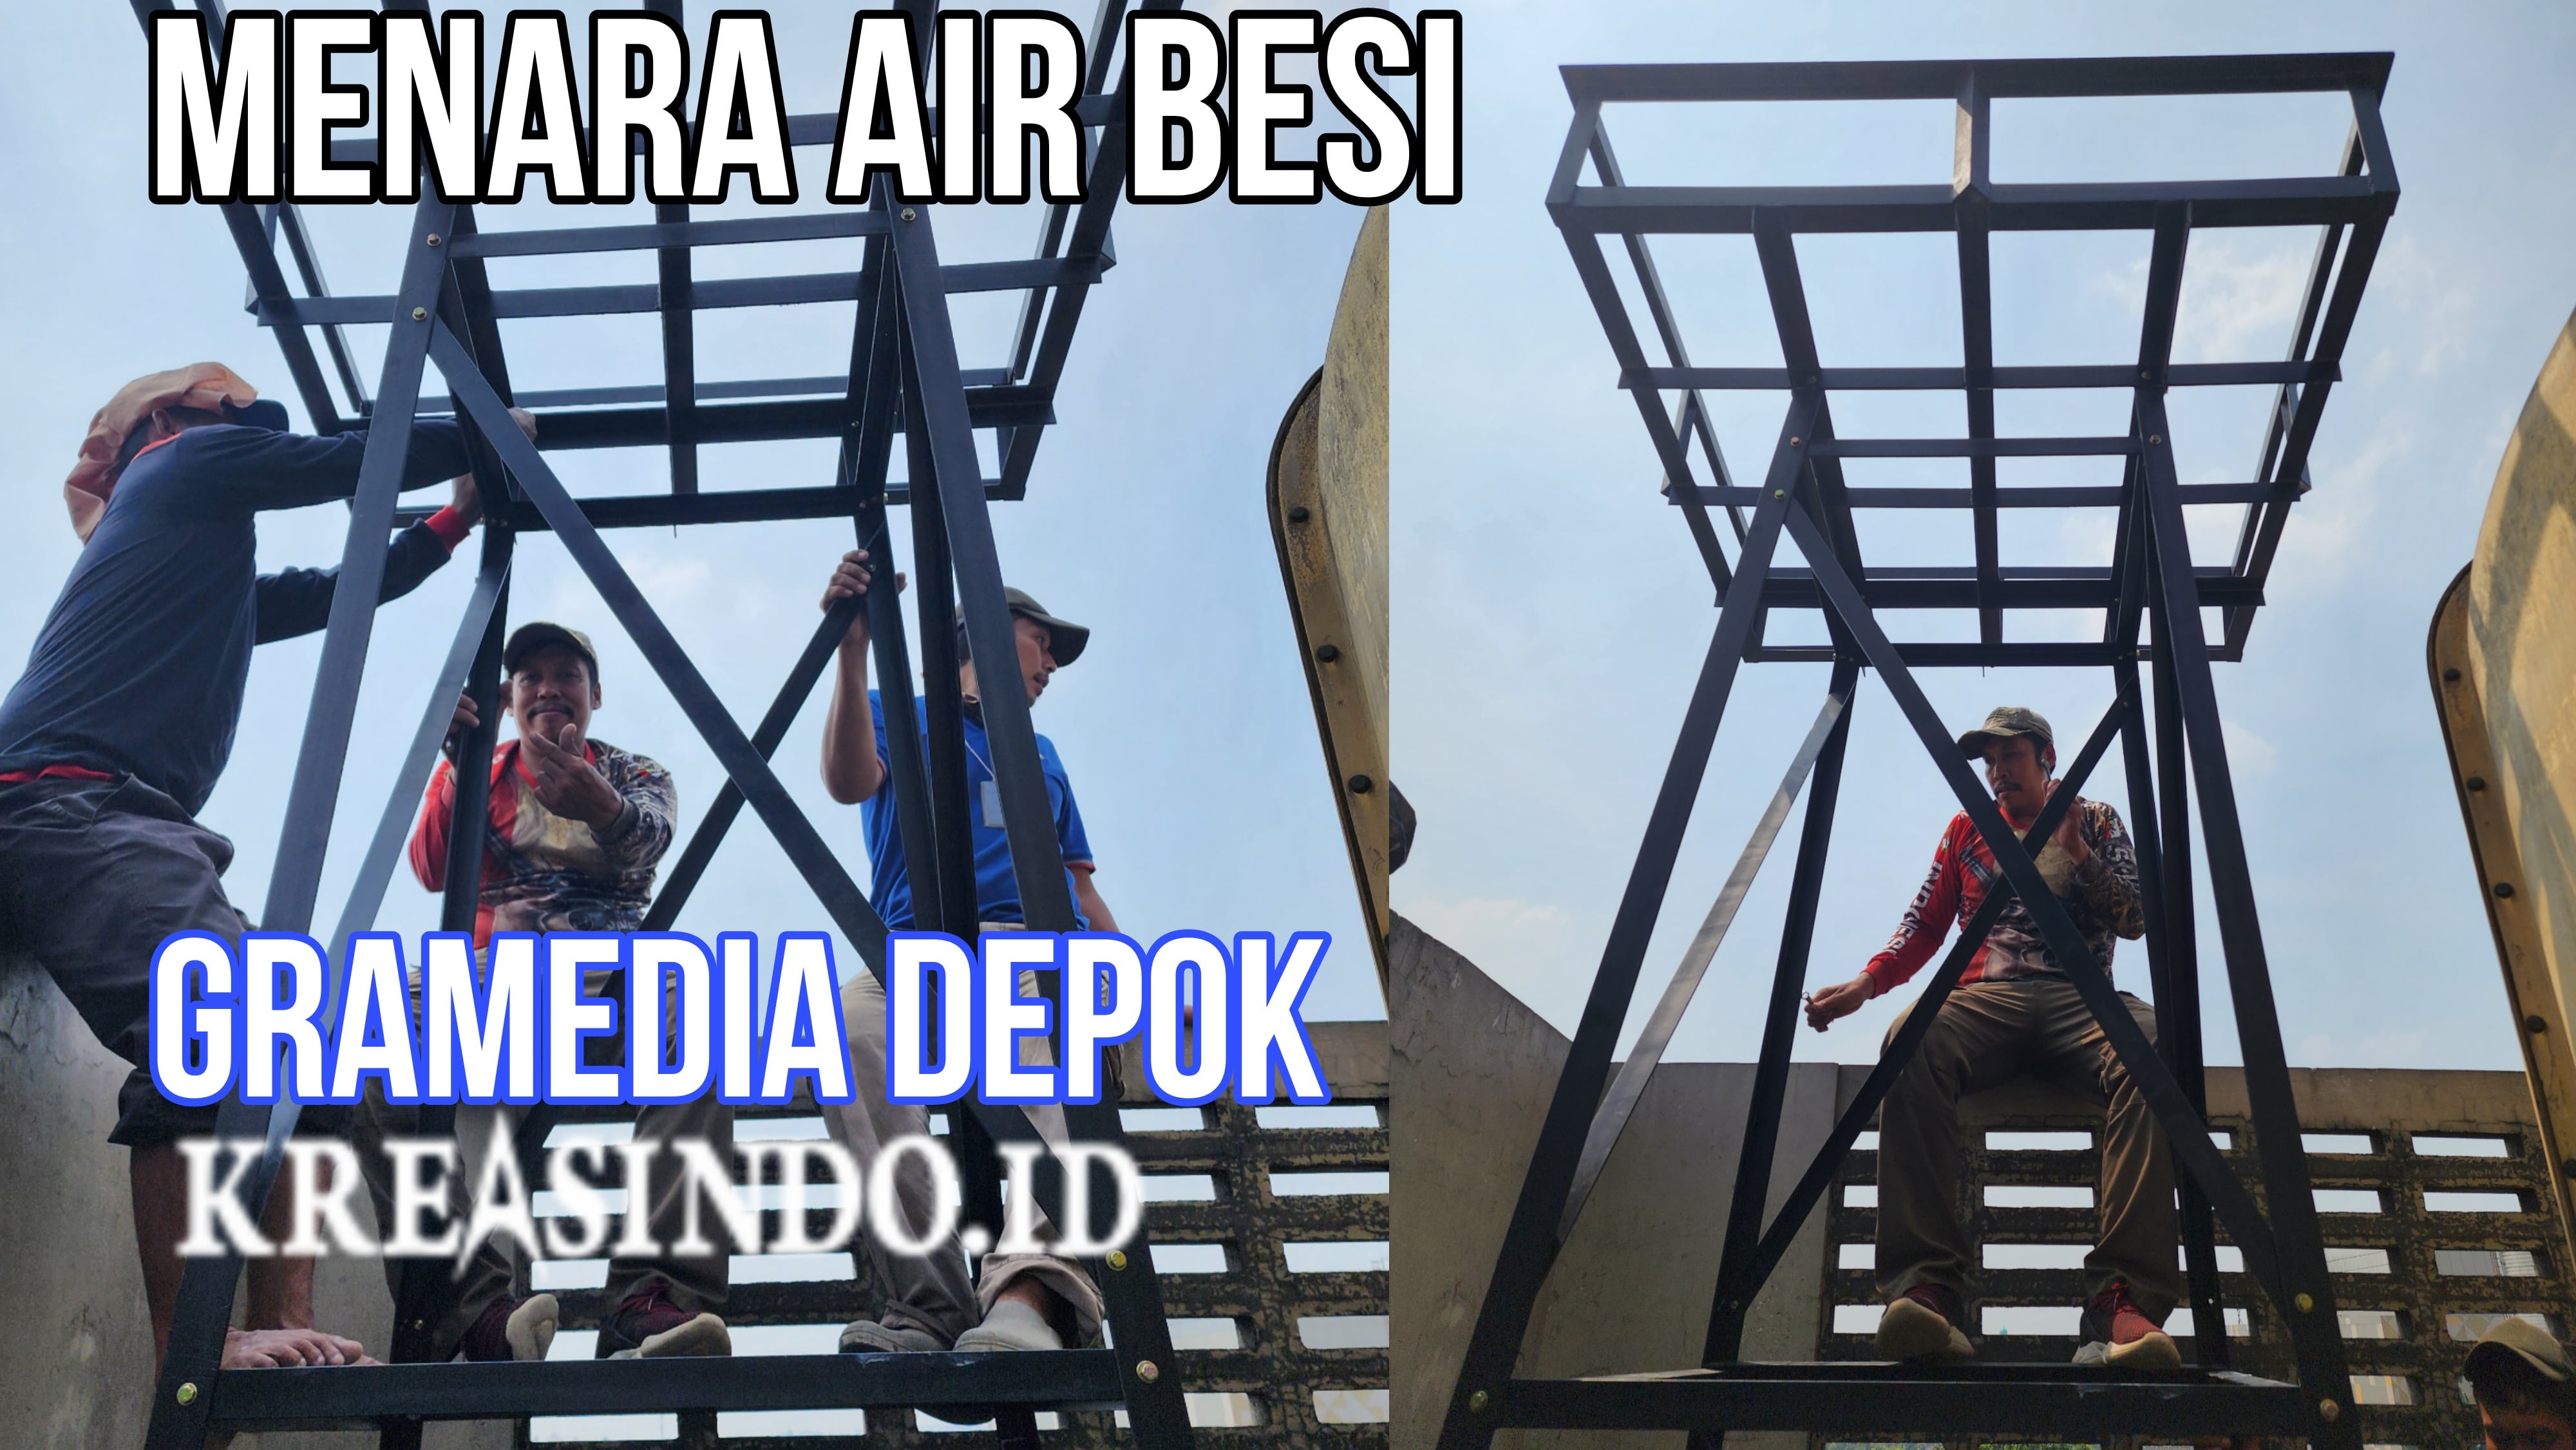 Menara Air Besi pesanan Toko Gramedia Margonda Depok